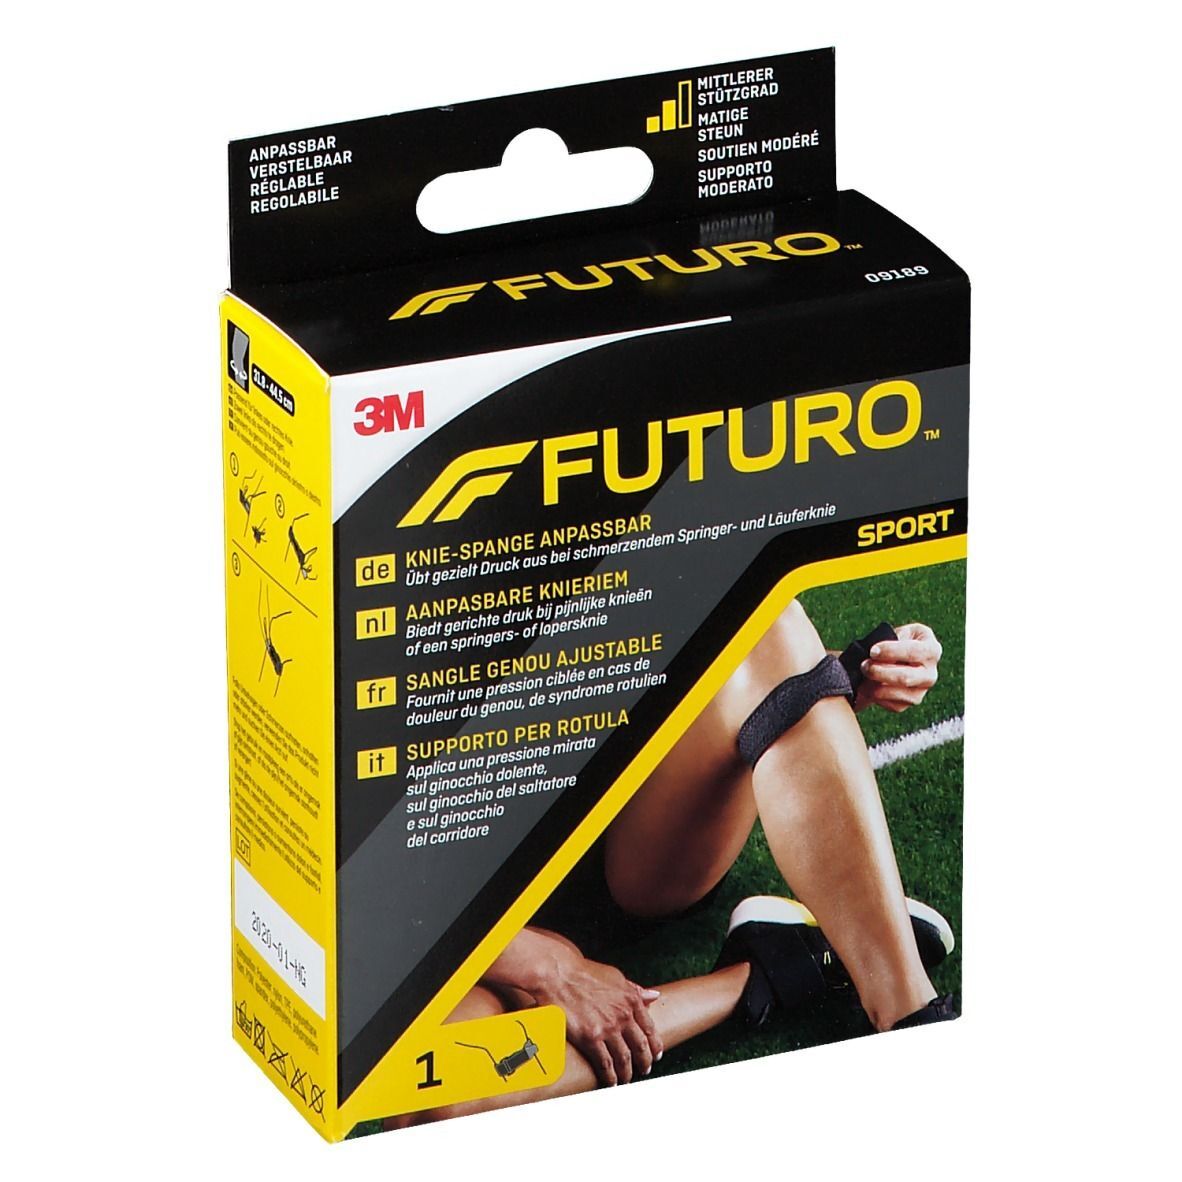 Futuro 3M™ Futuro™ Sport Knie-Spange anpassbar